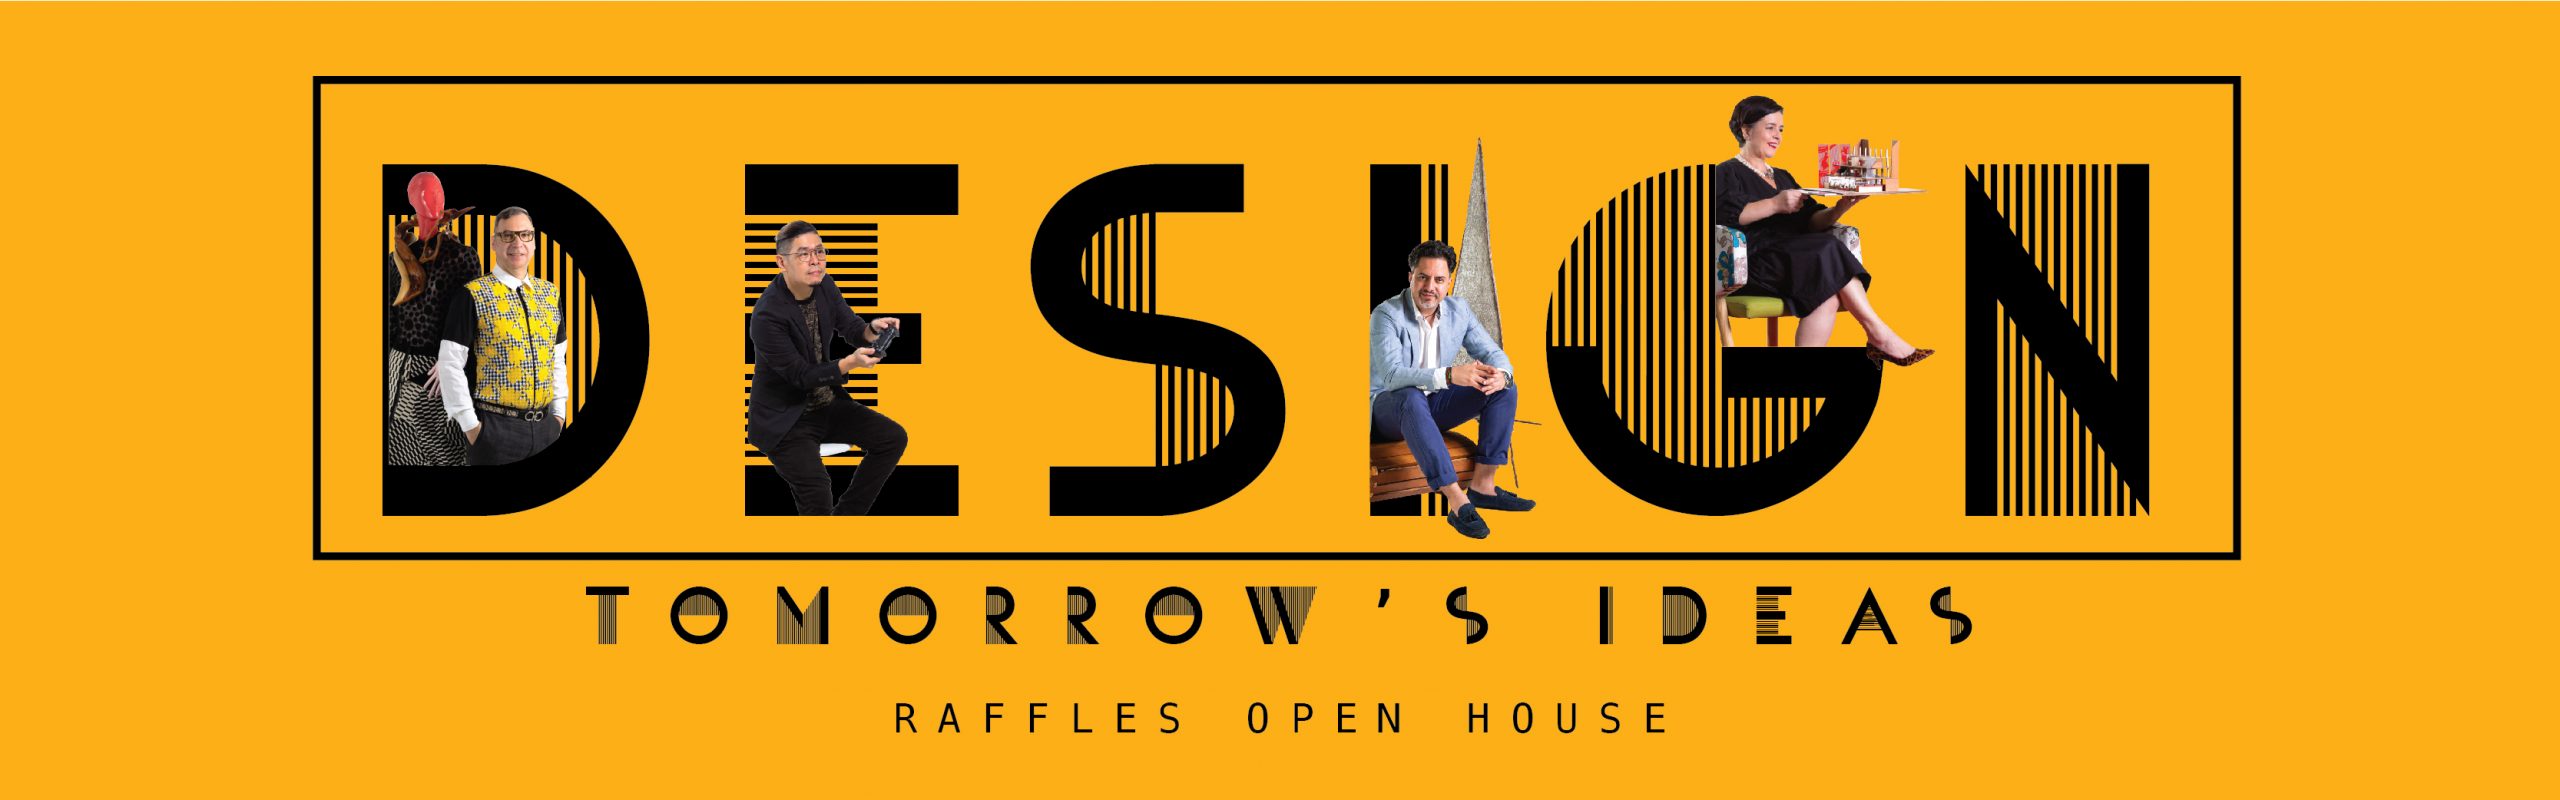 Design Tomorrow's Ideas Raffles Online Open house 2021 Opening Banner